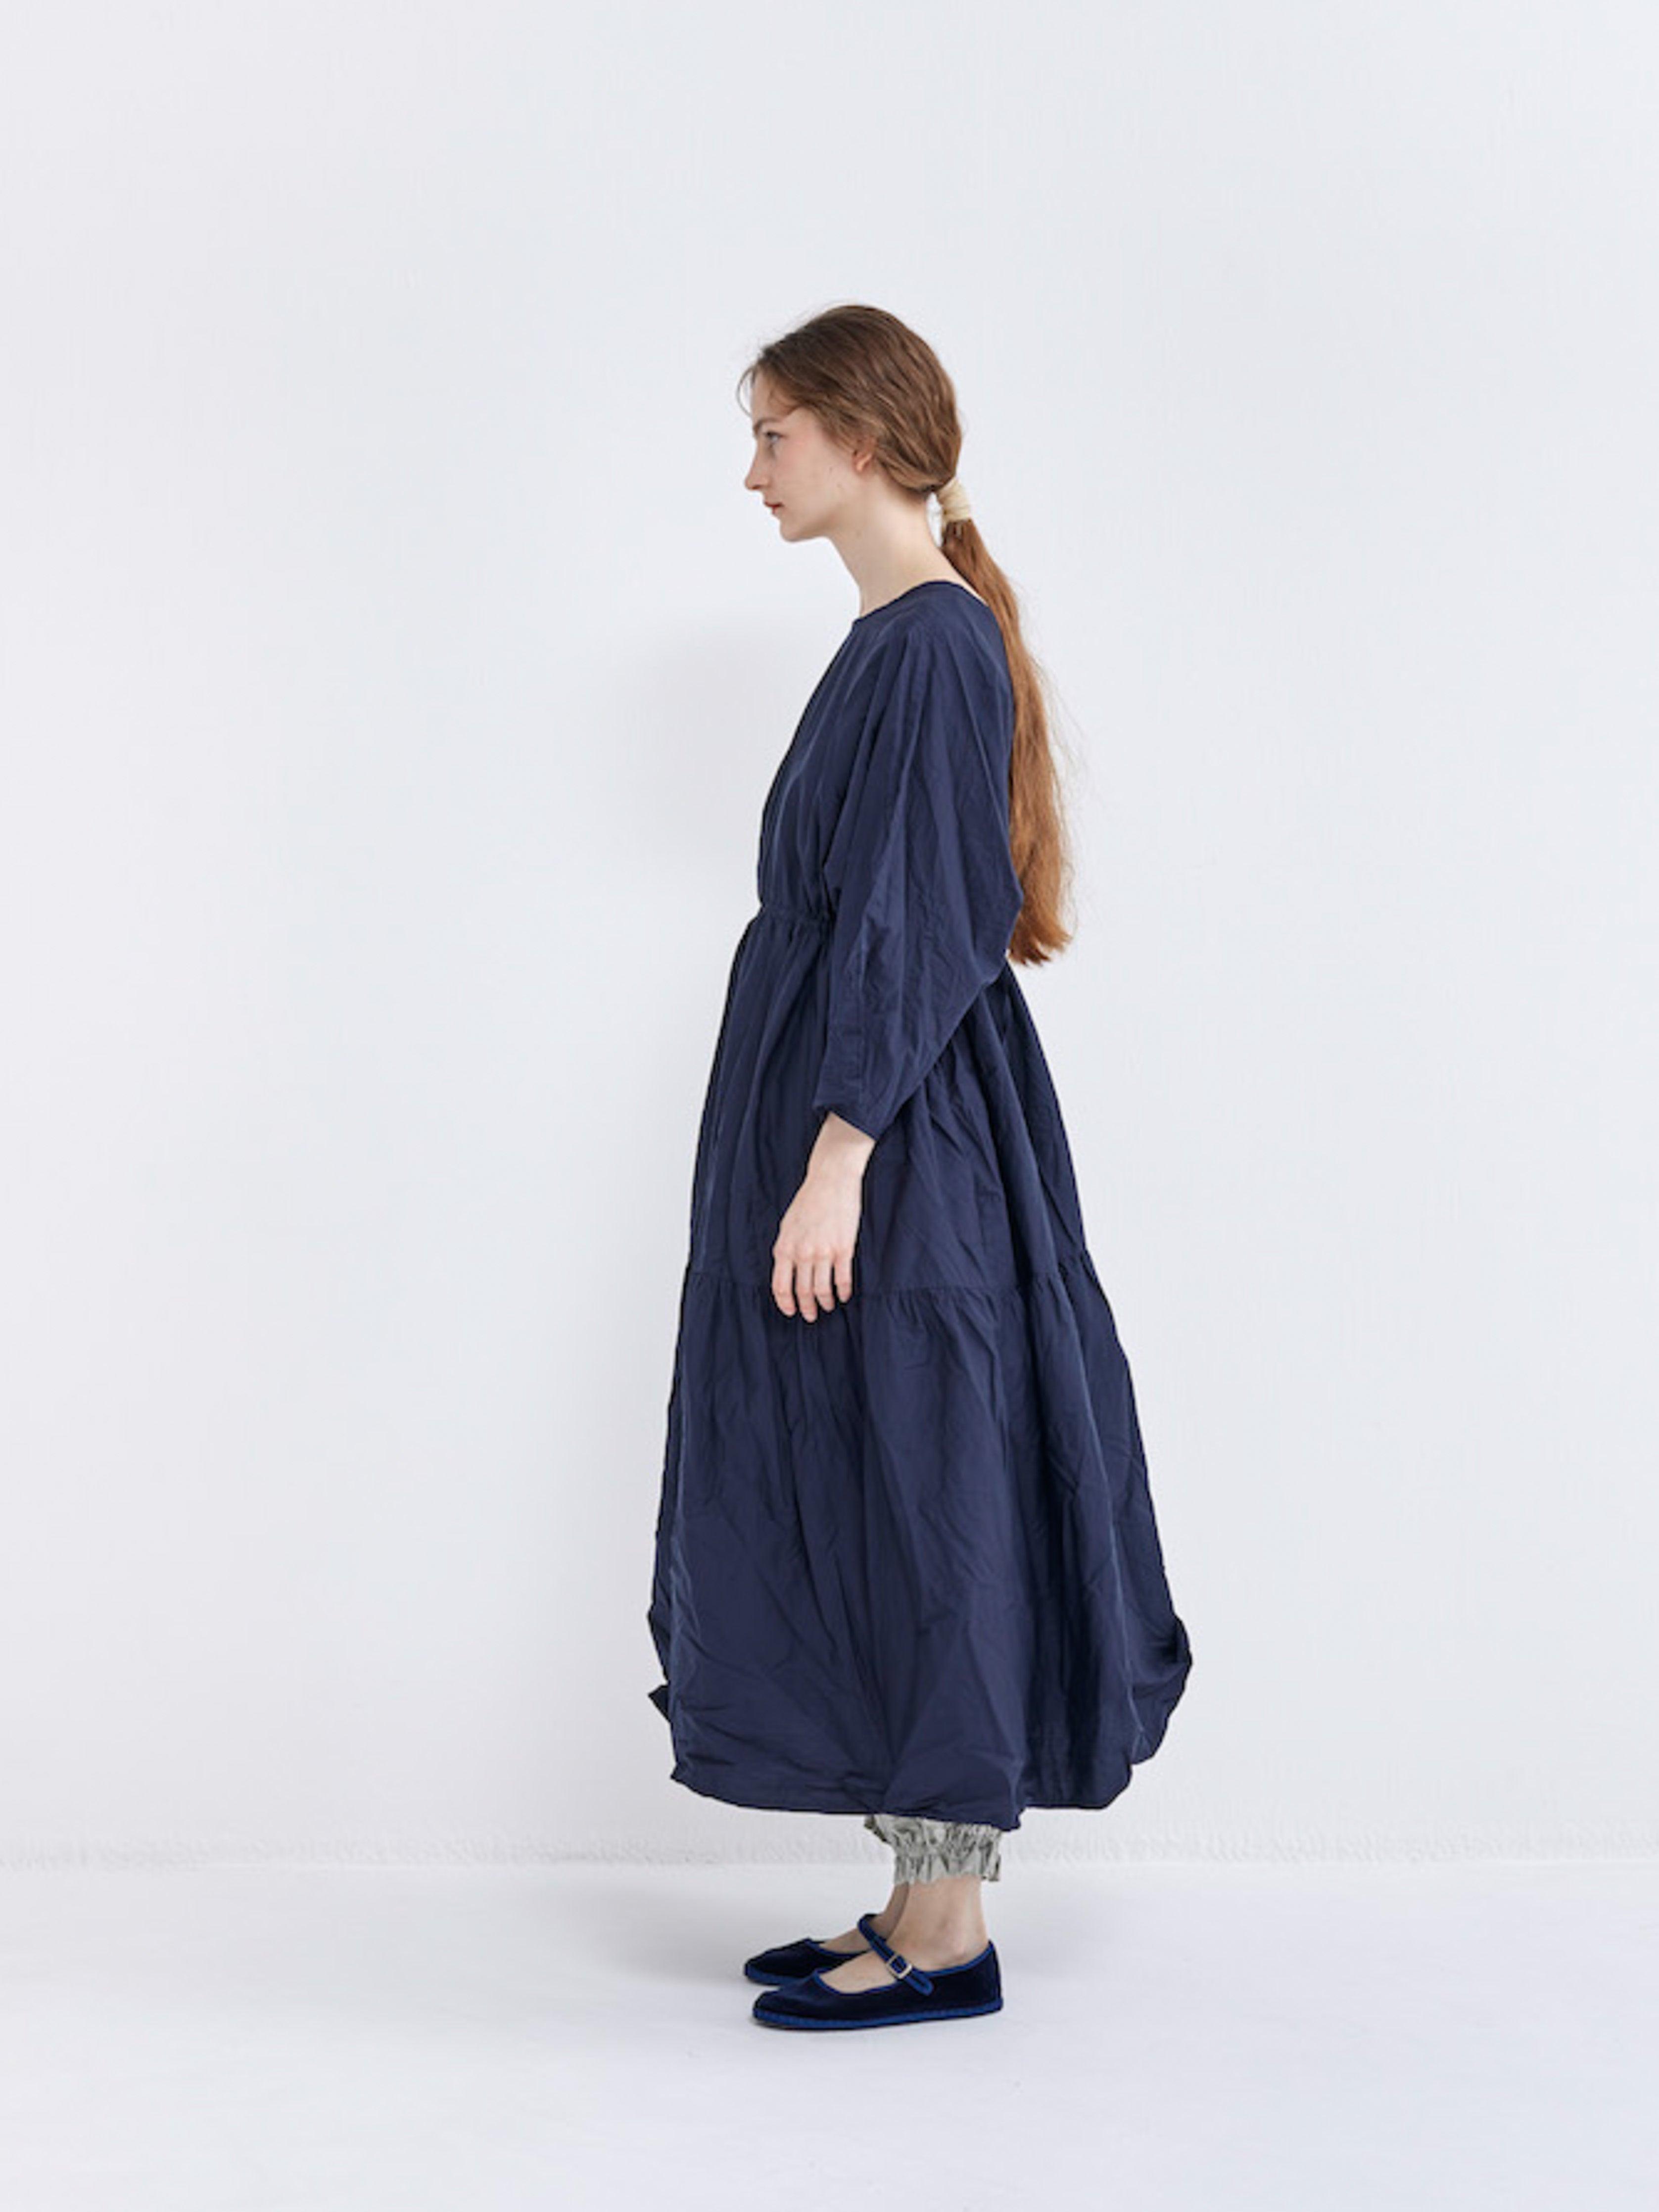 Namu Shop - Veritecoeur Co / Silk Two Way Dress - Navy